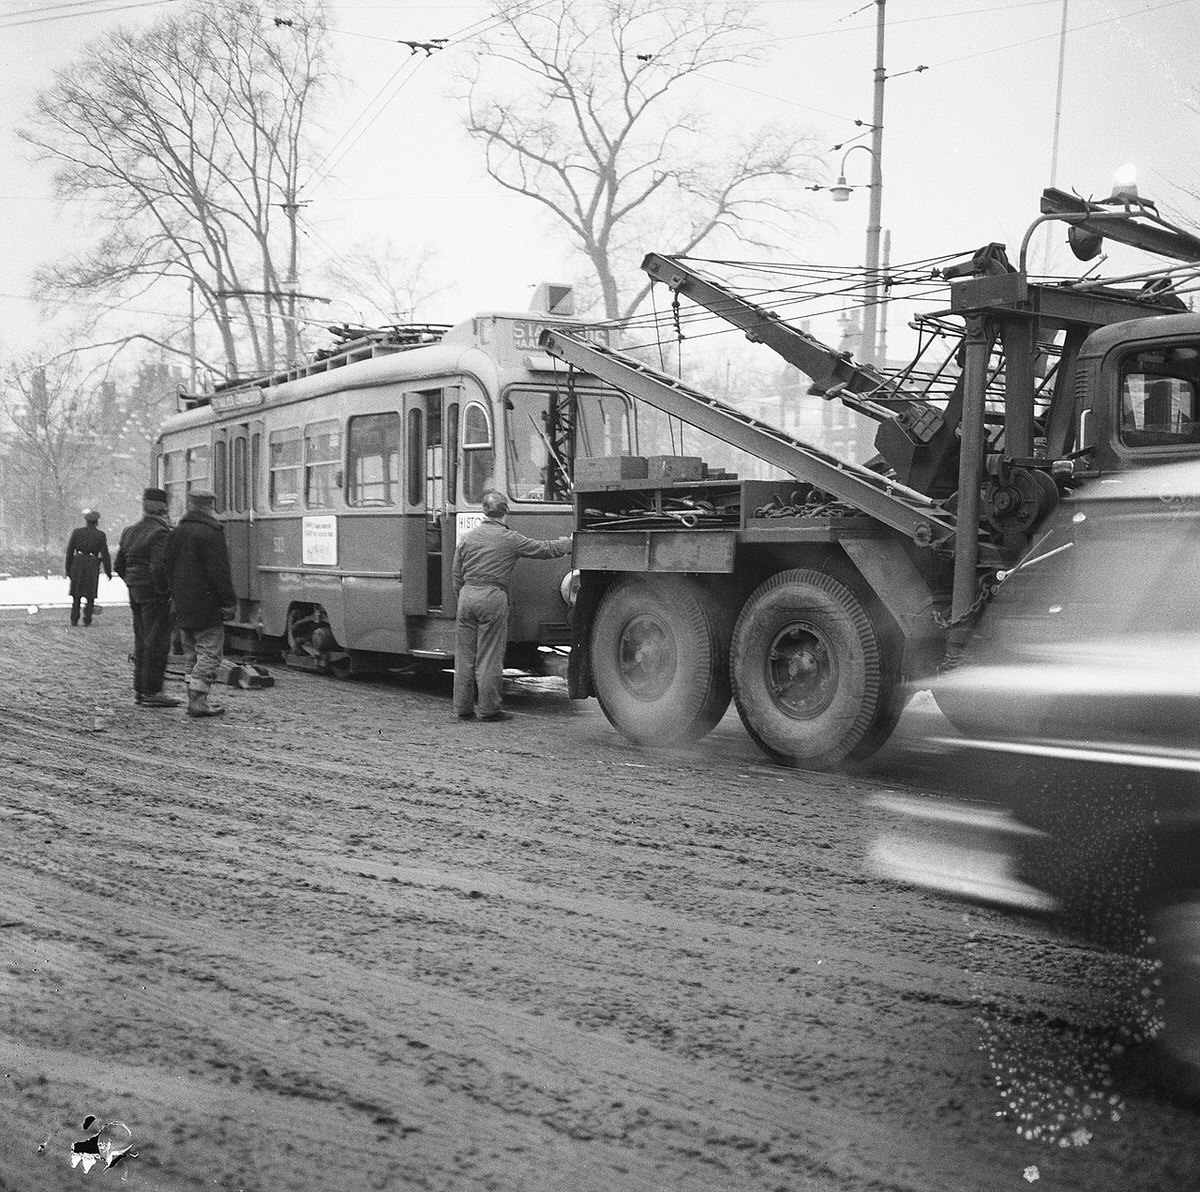 Tram off rails at Weteringscircuit, January 17, 1966